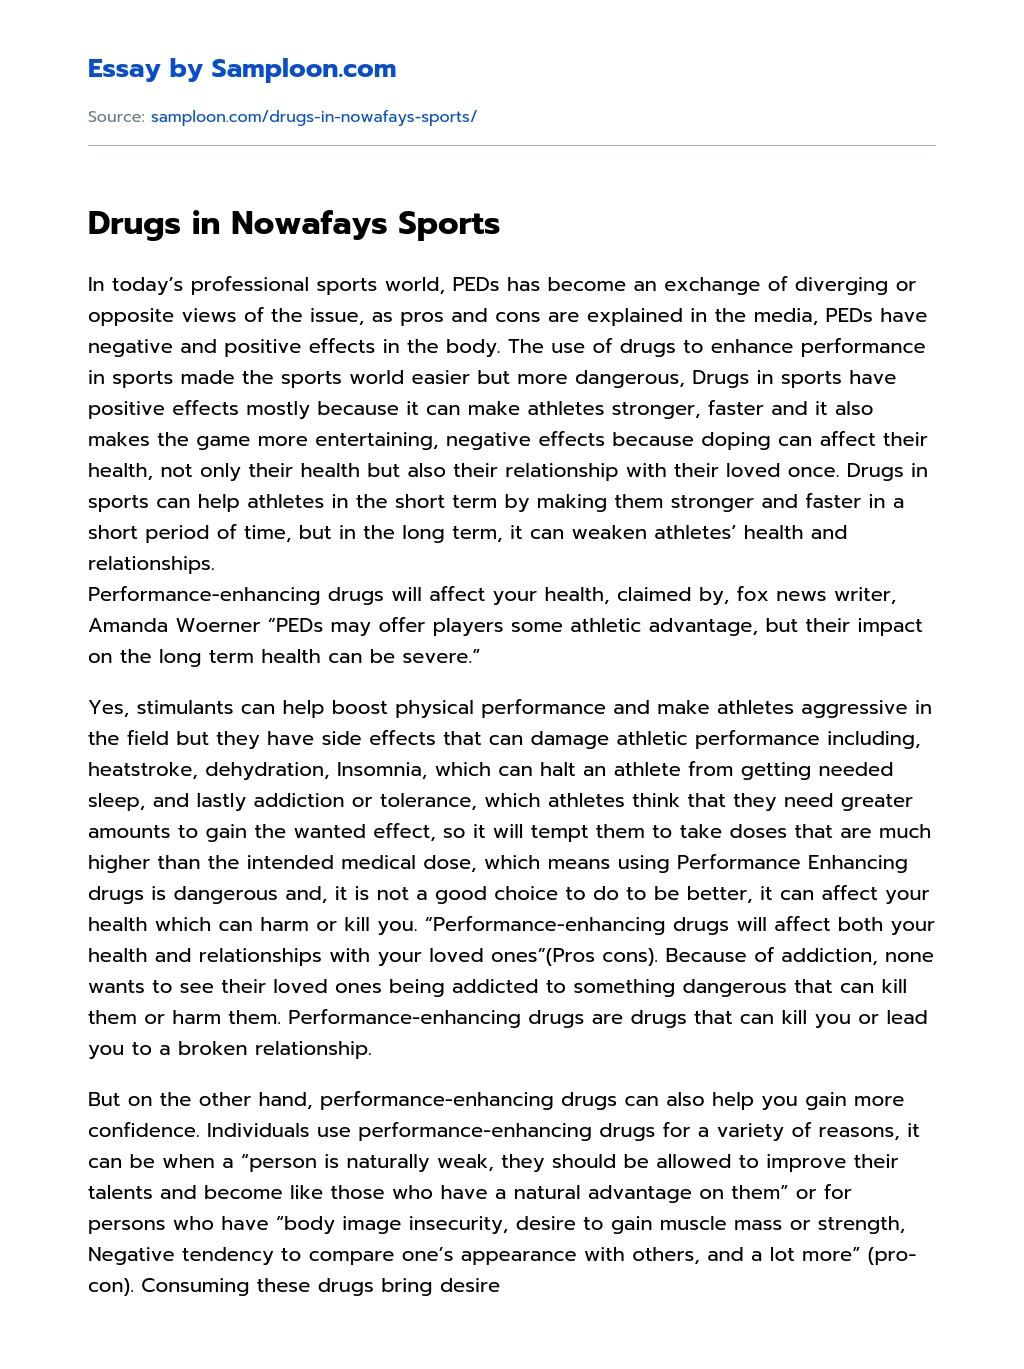 Drugs in Nowafays Sports essay